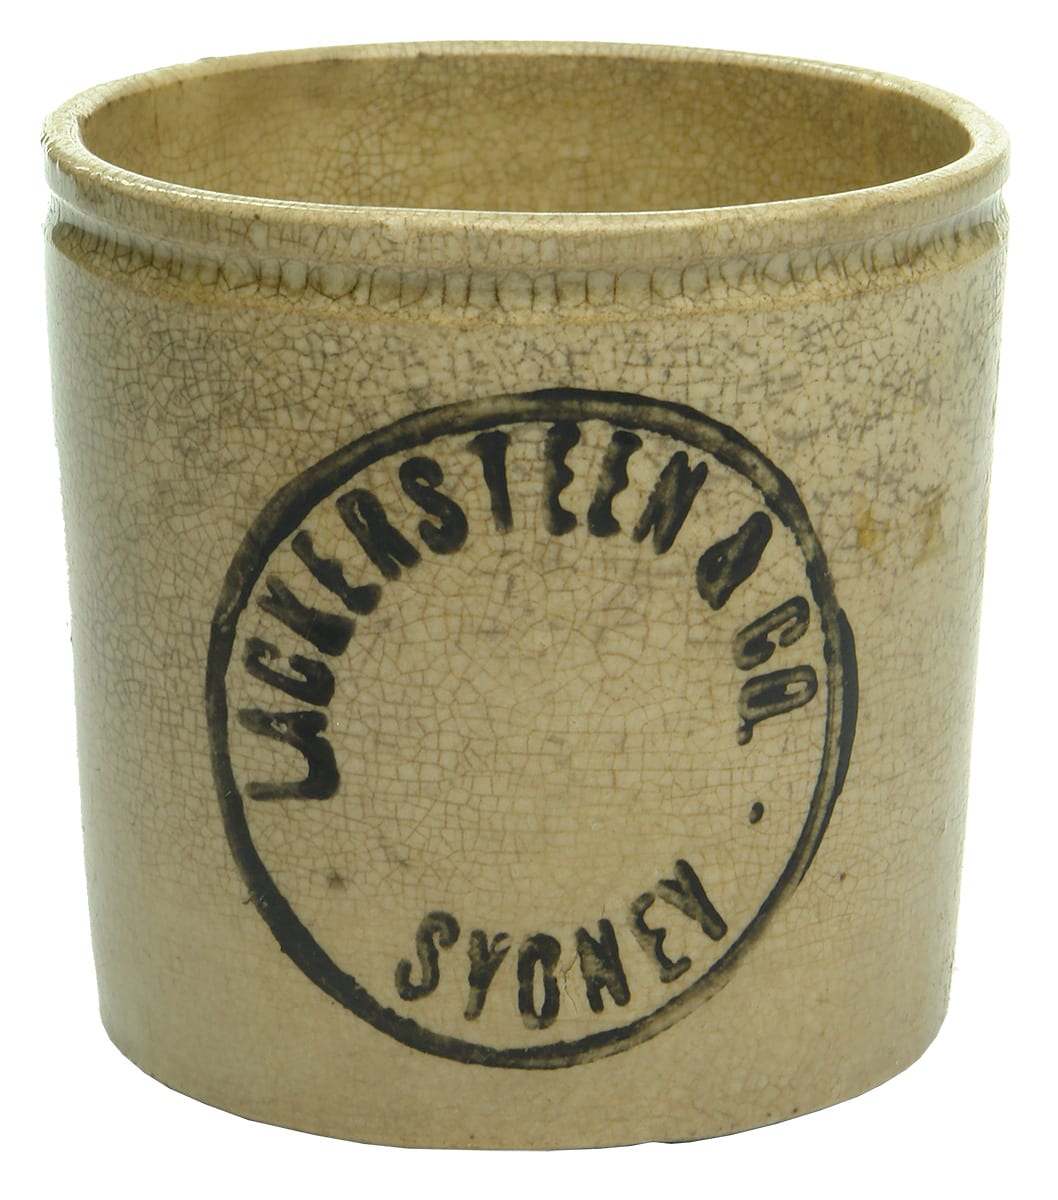 Lackersteen Sydney Printed Pottery Jam Jar